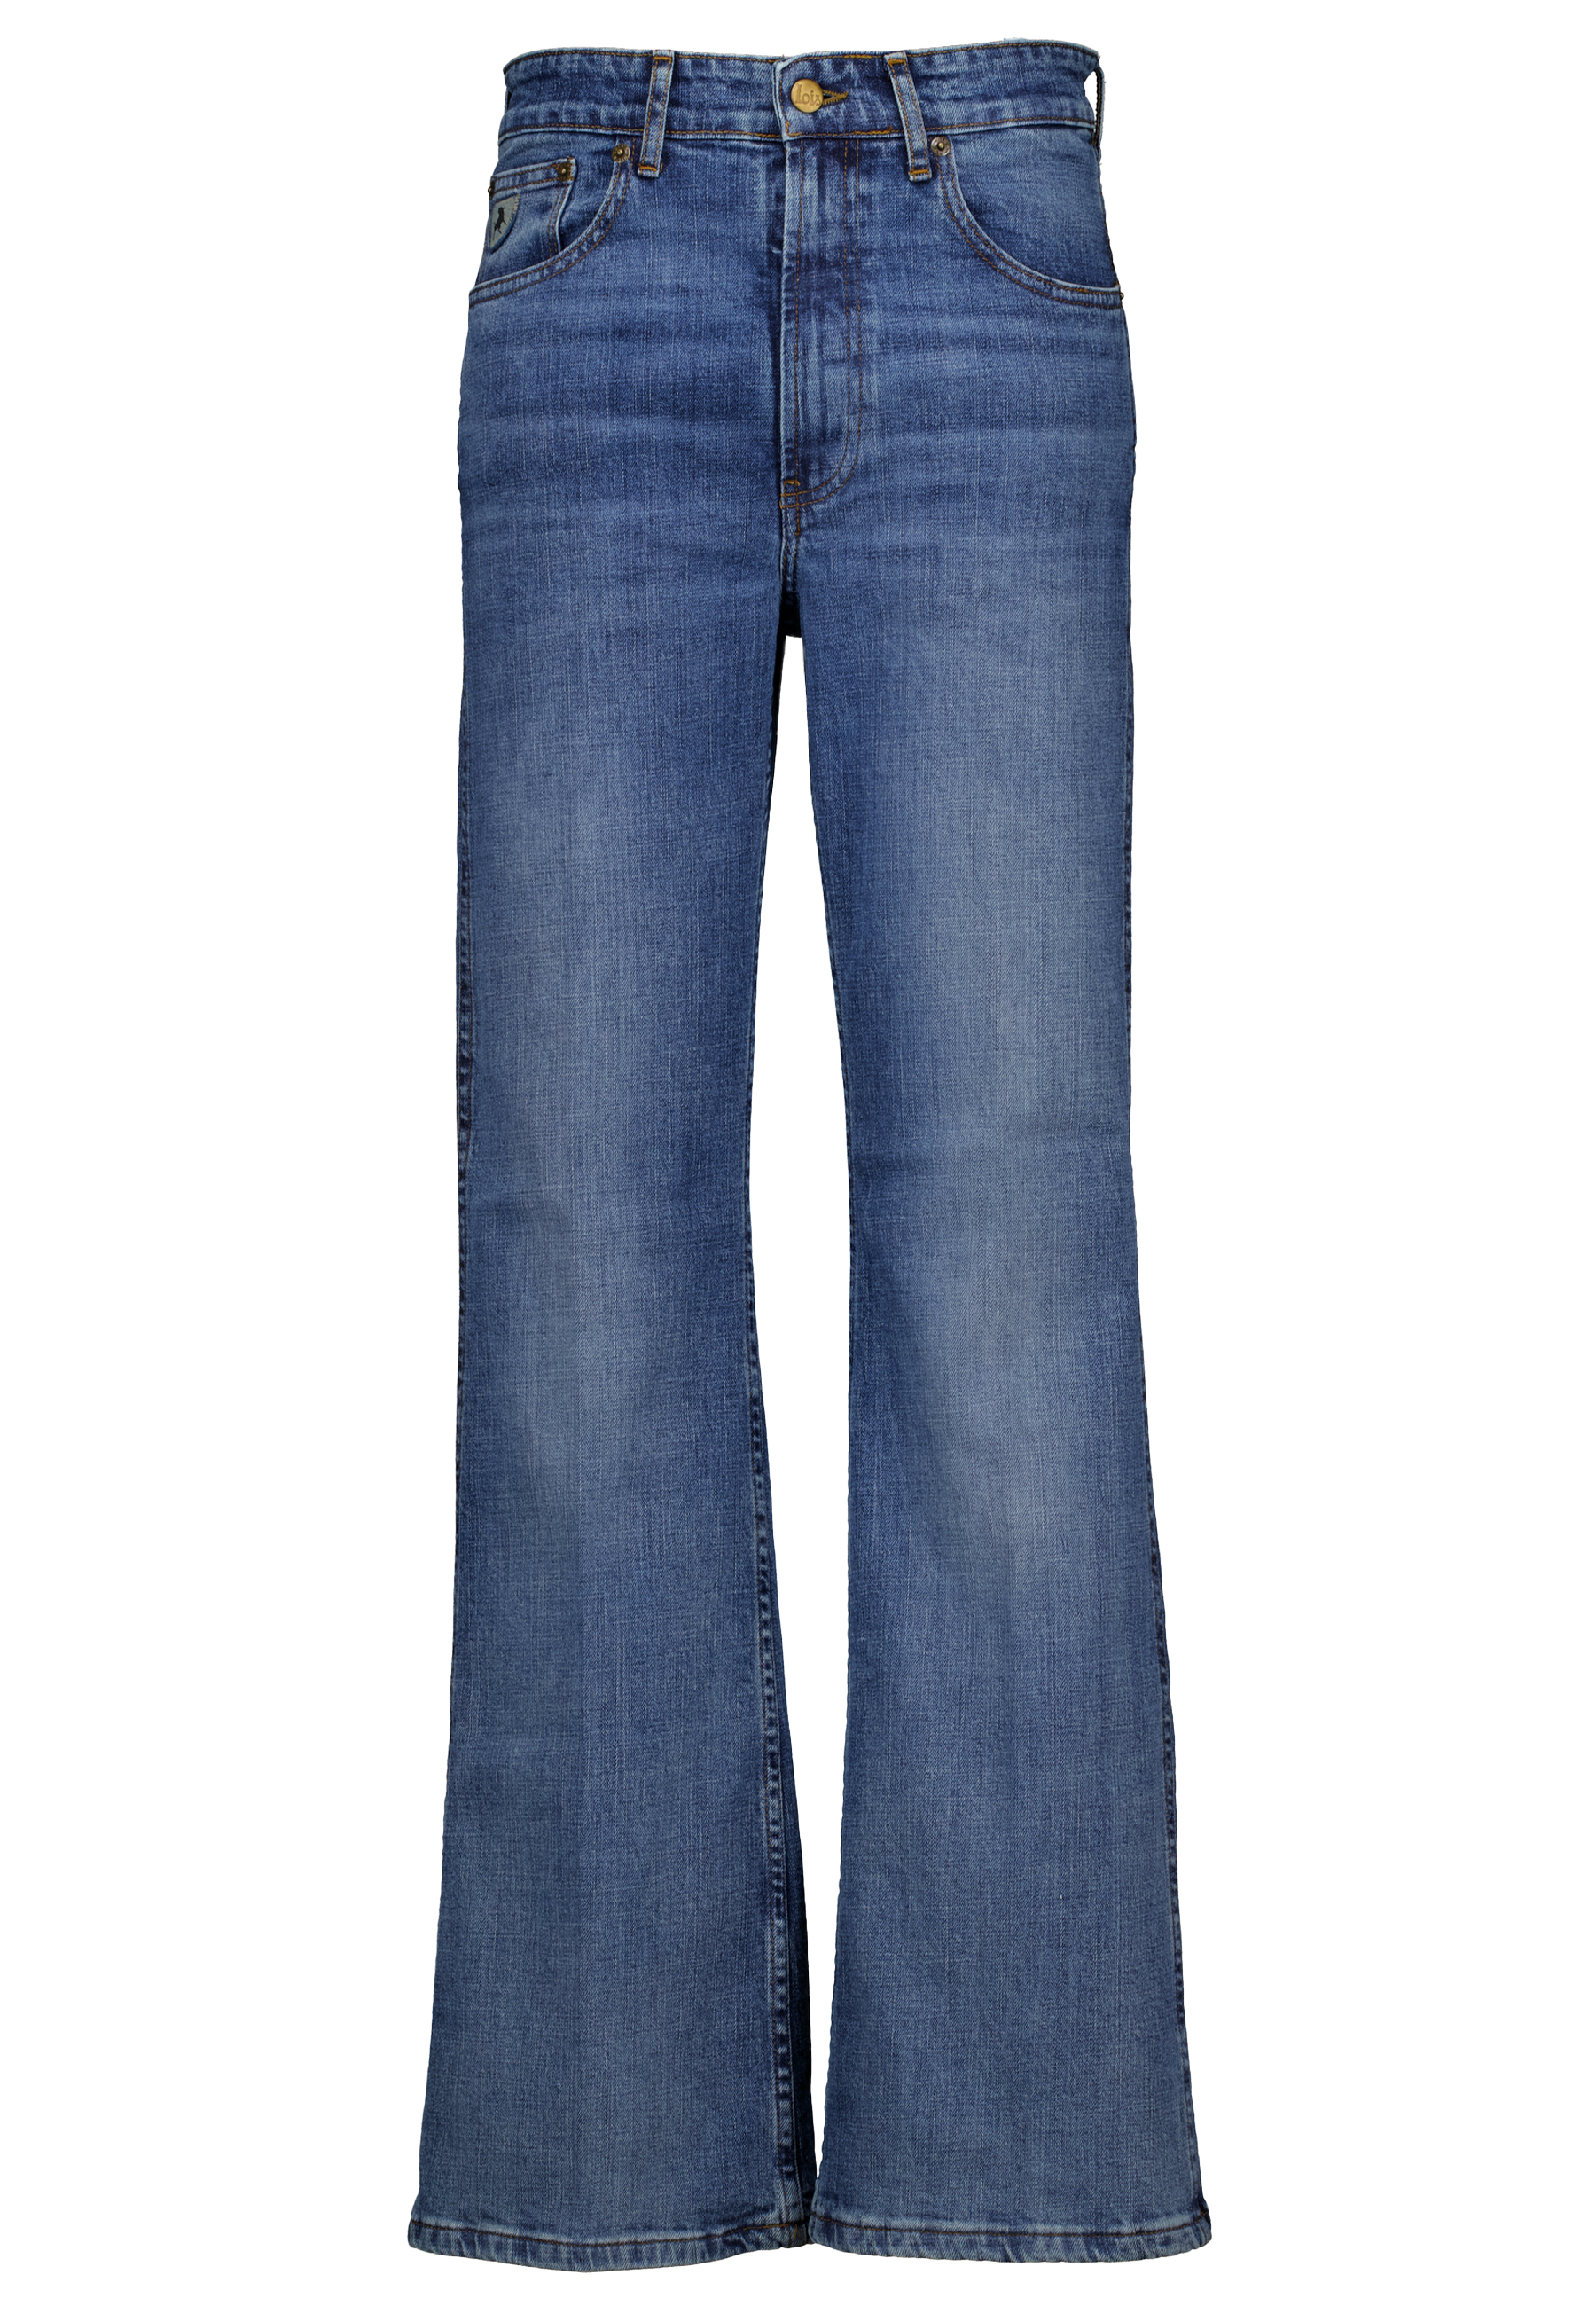 Lois Riley jeans blauw Dames maat 26/32